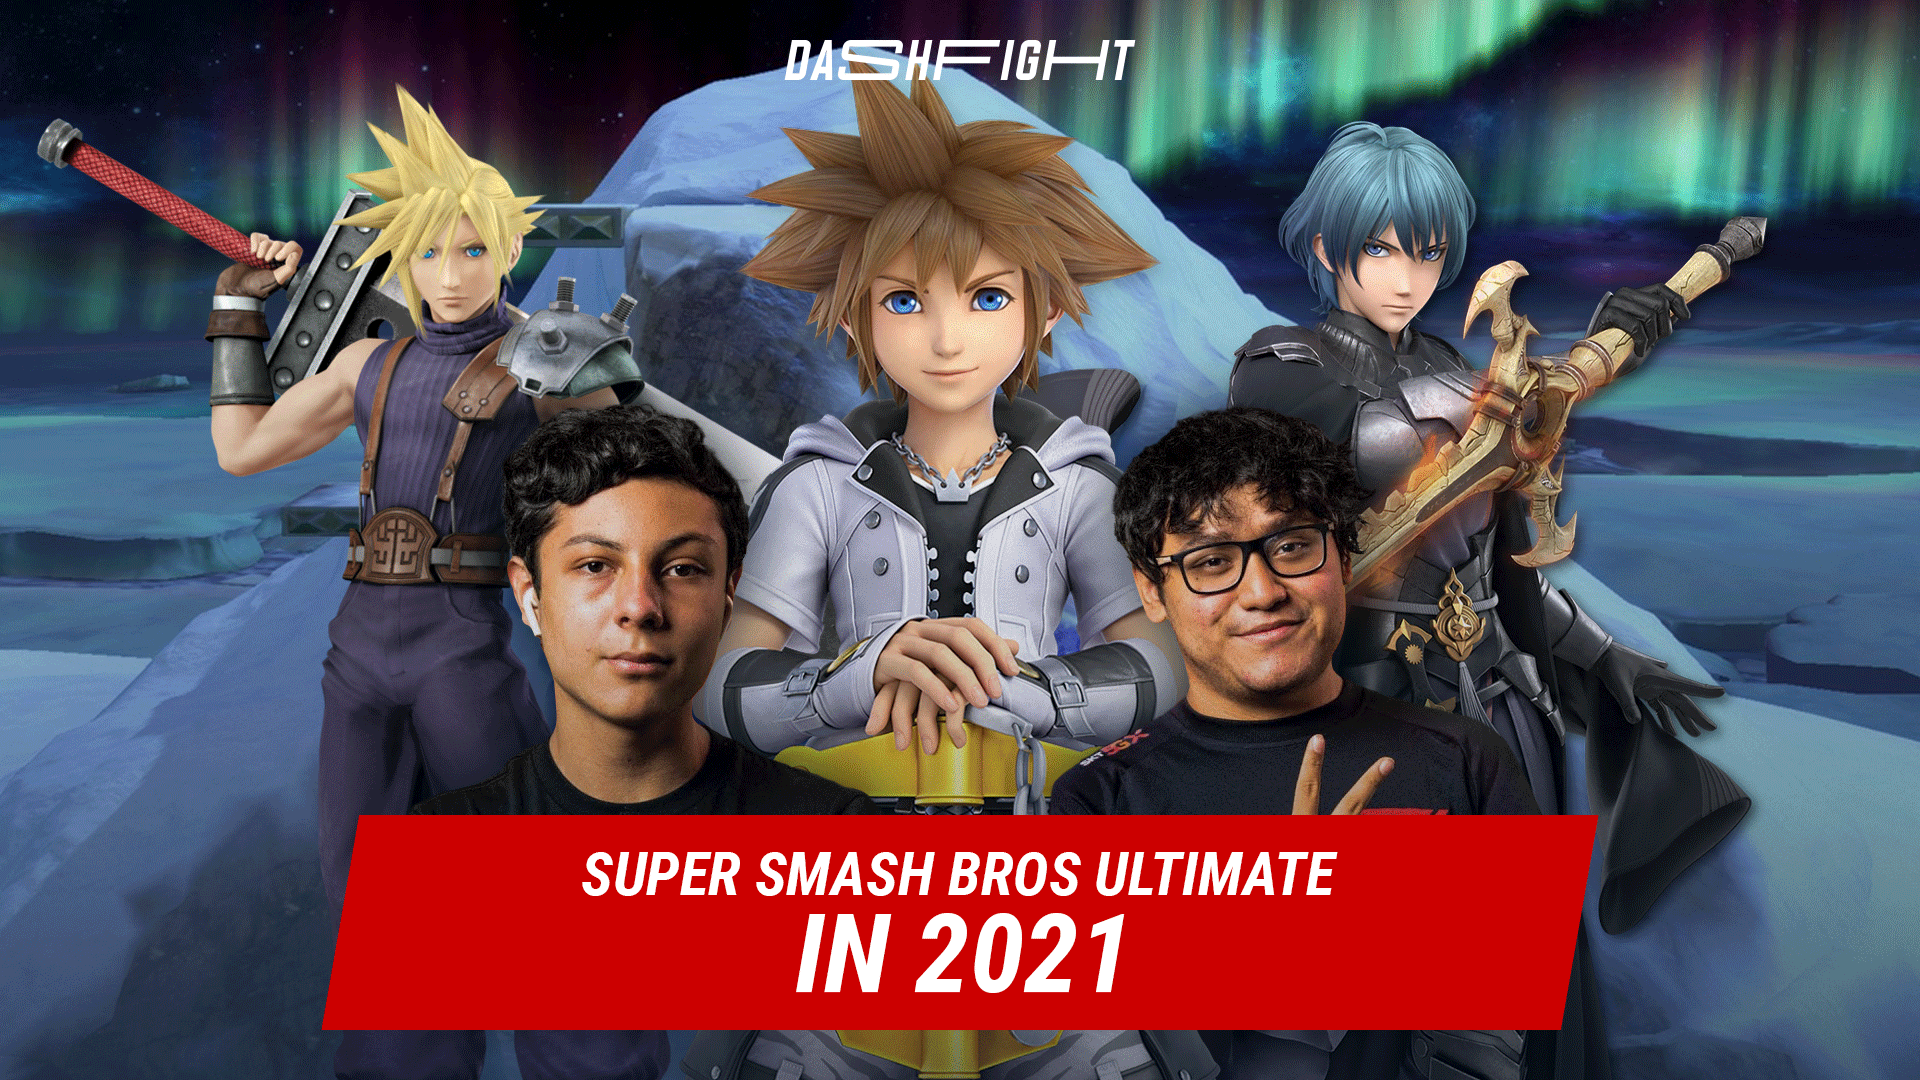 Super Smash Bros Ultimate in 2021